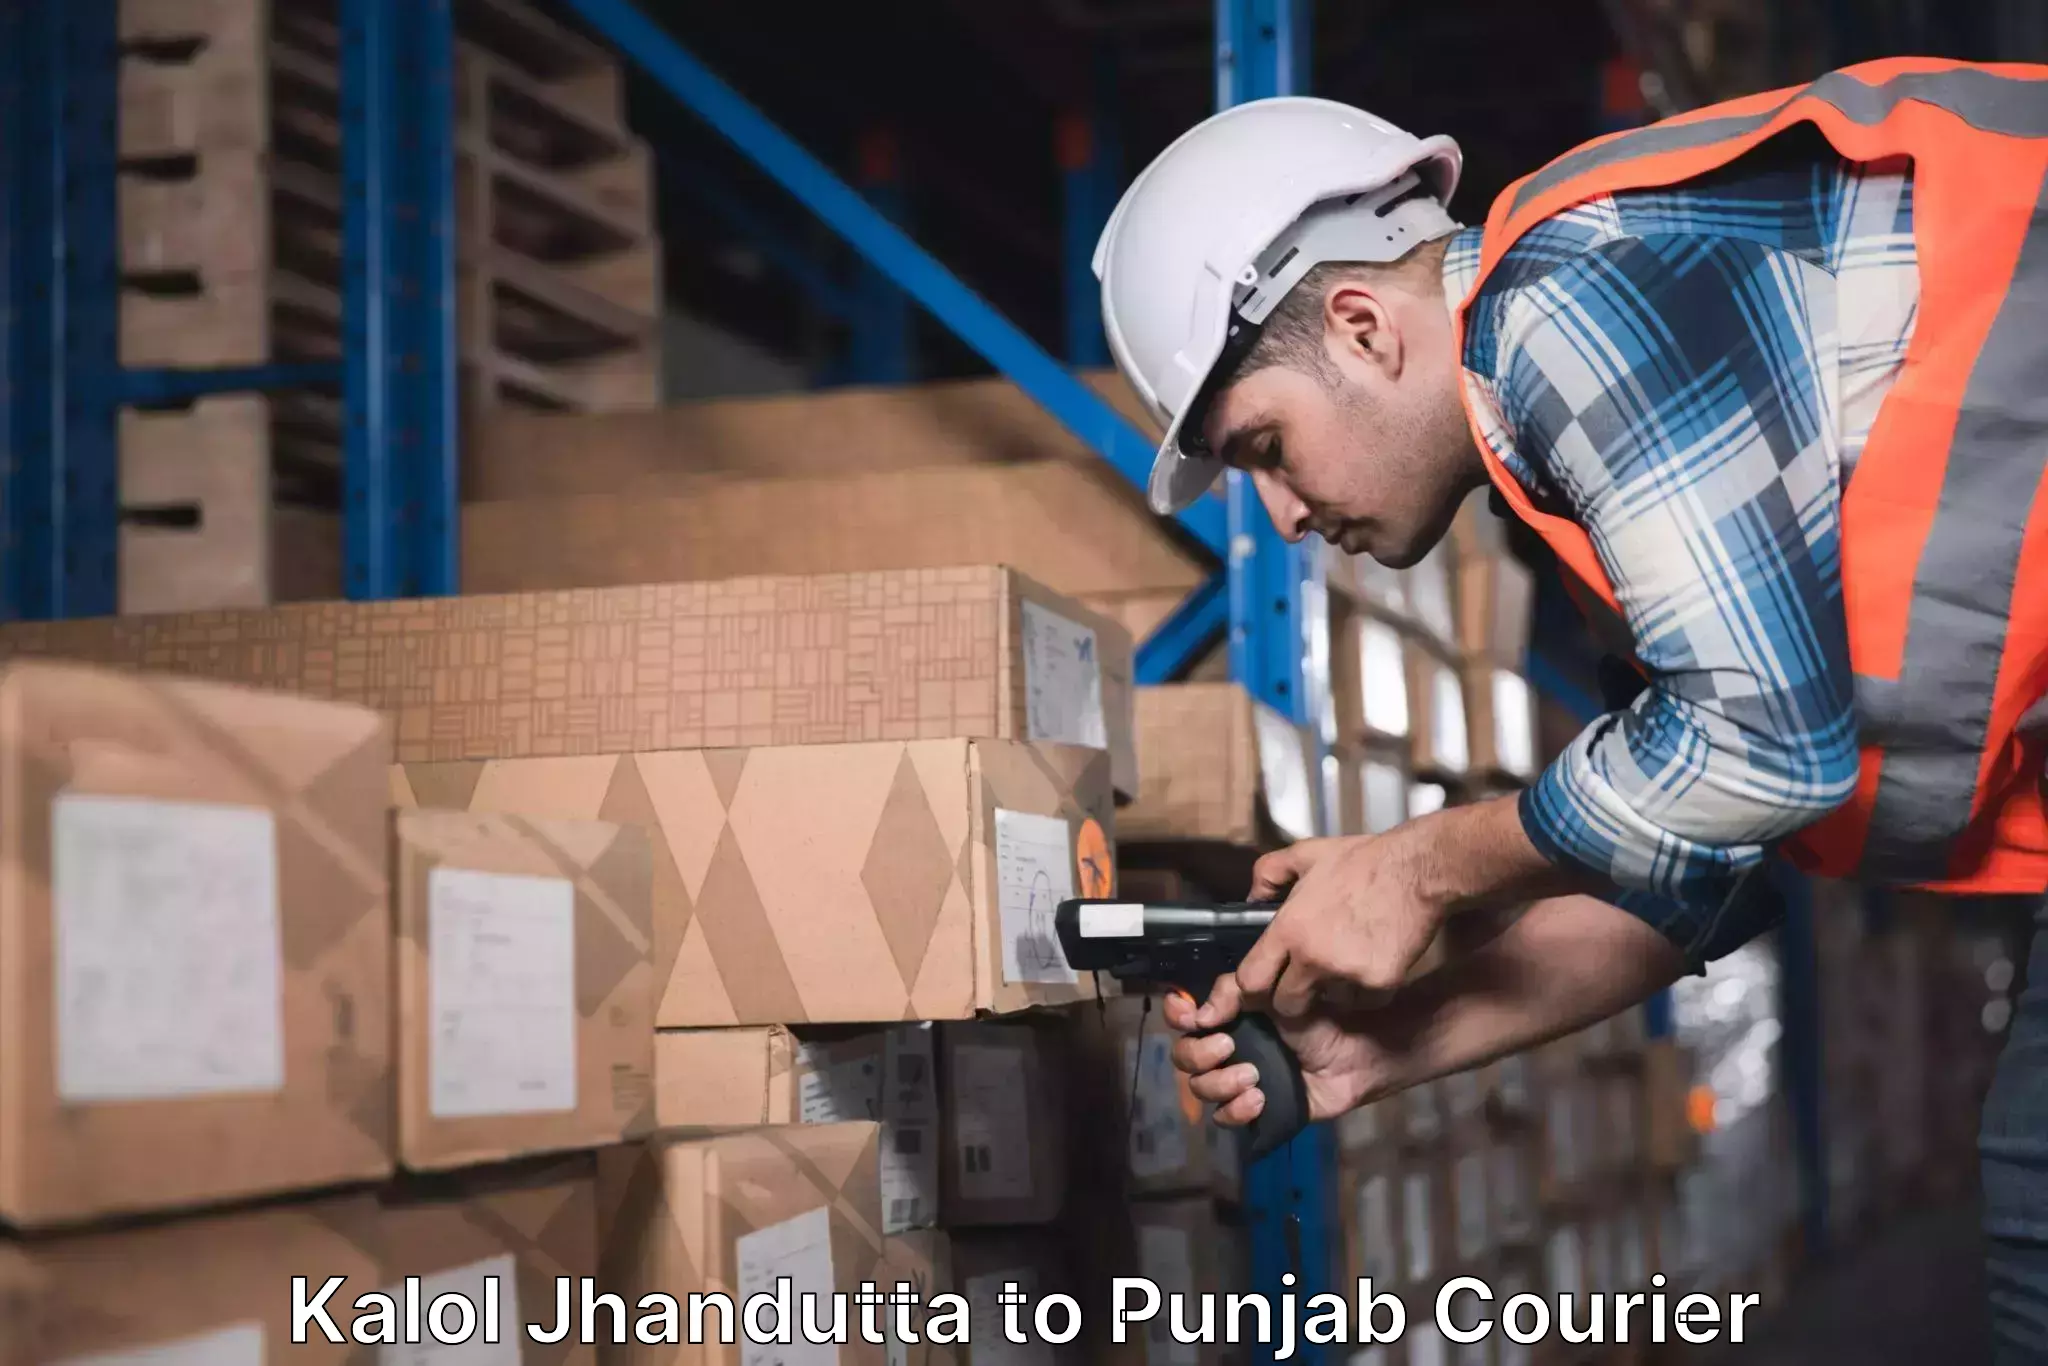 Efficient parcel service Kalol Jhandutta to Ajnala